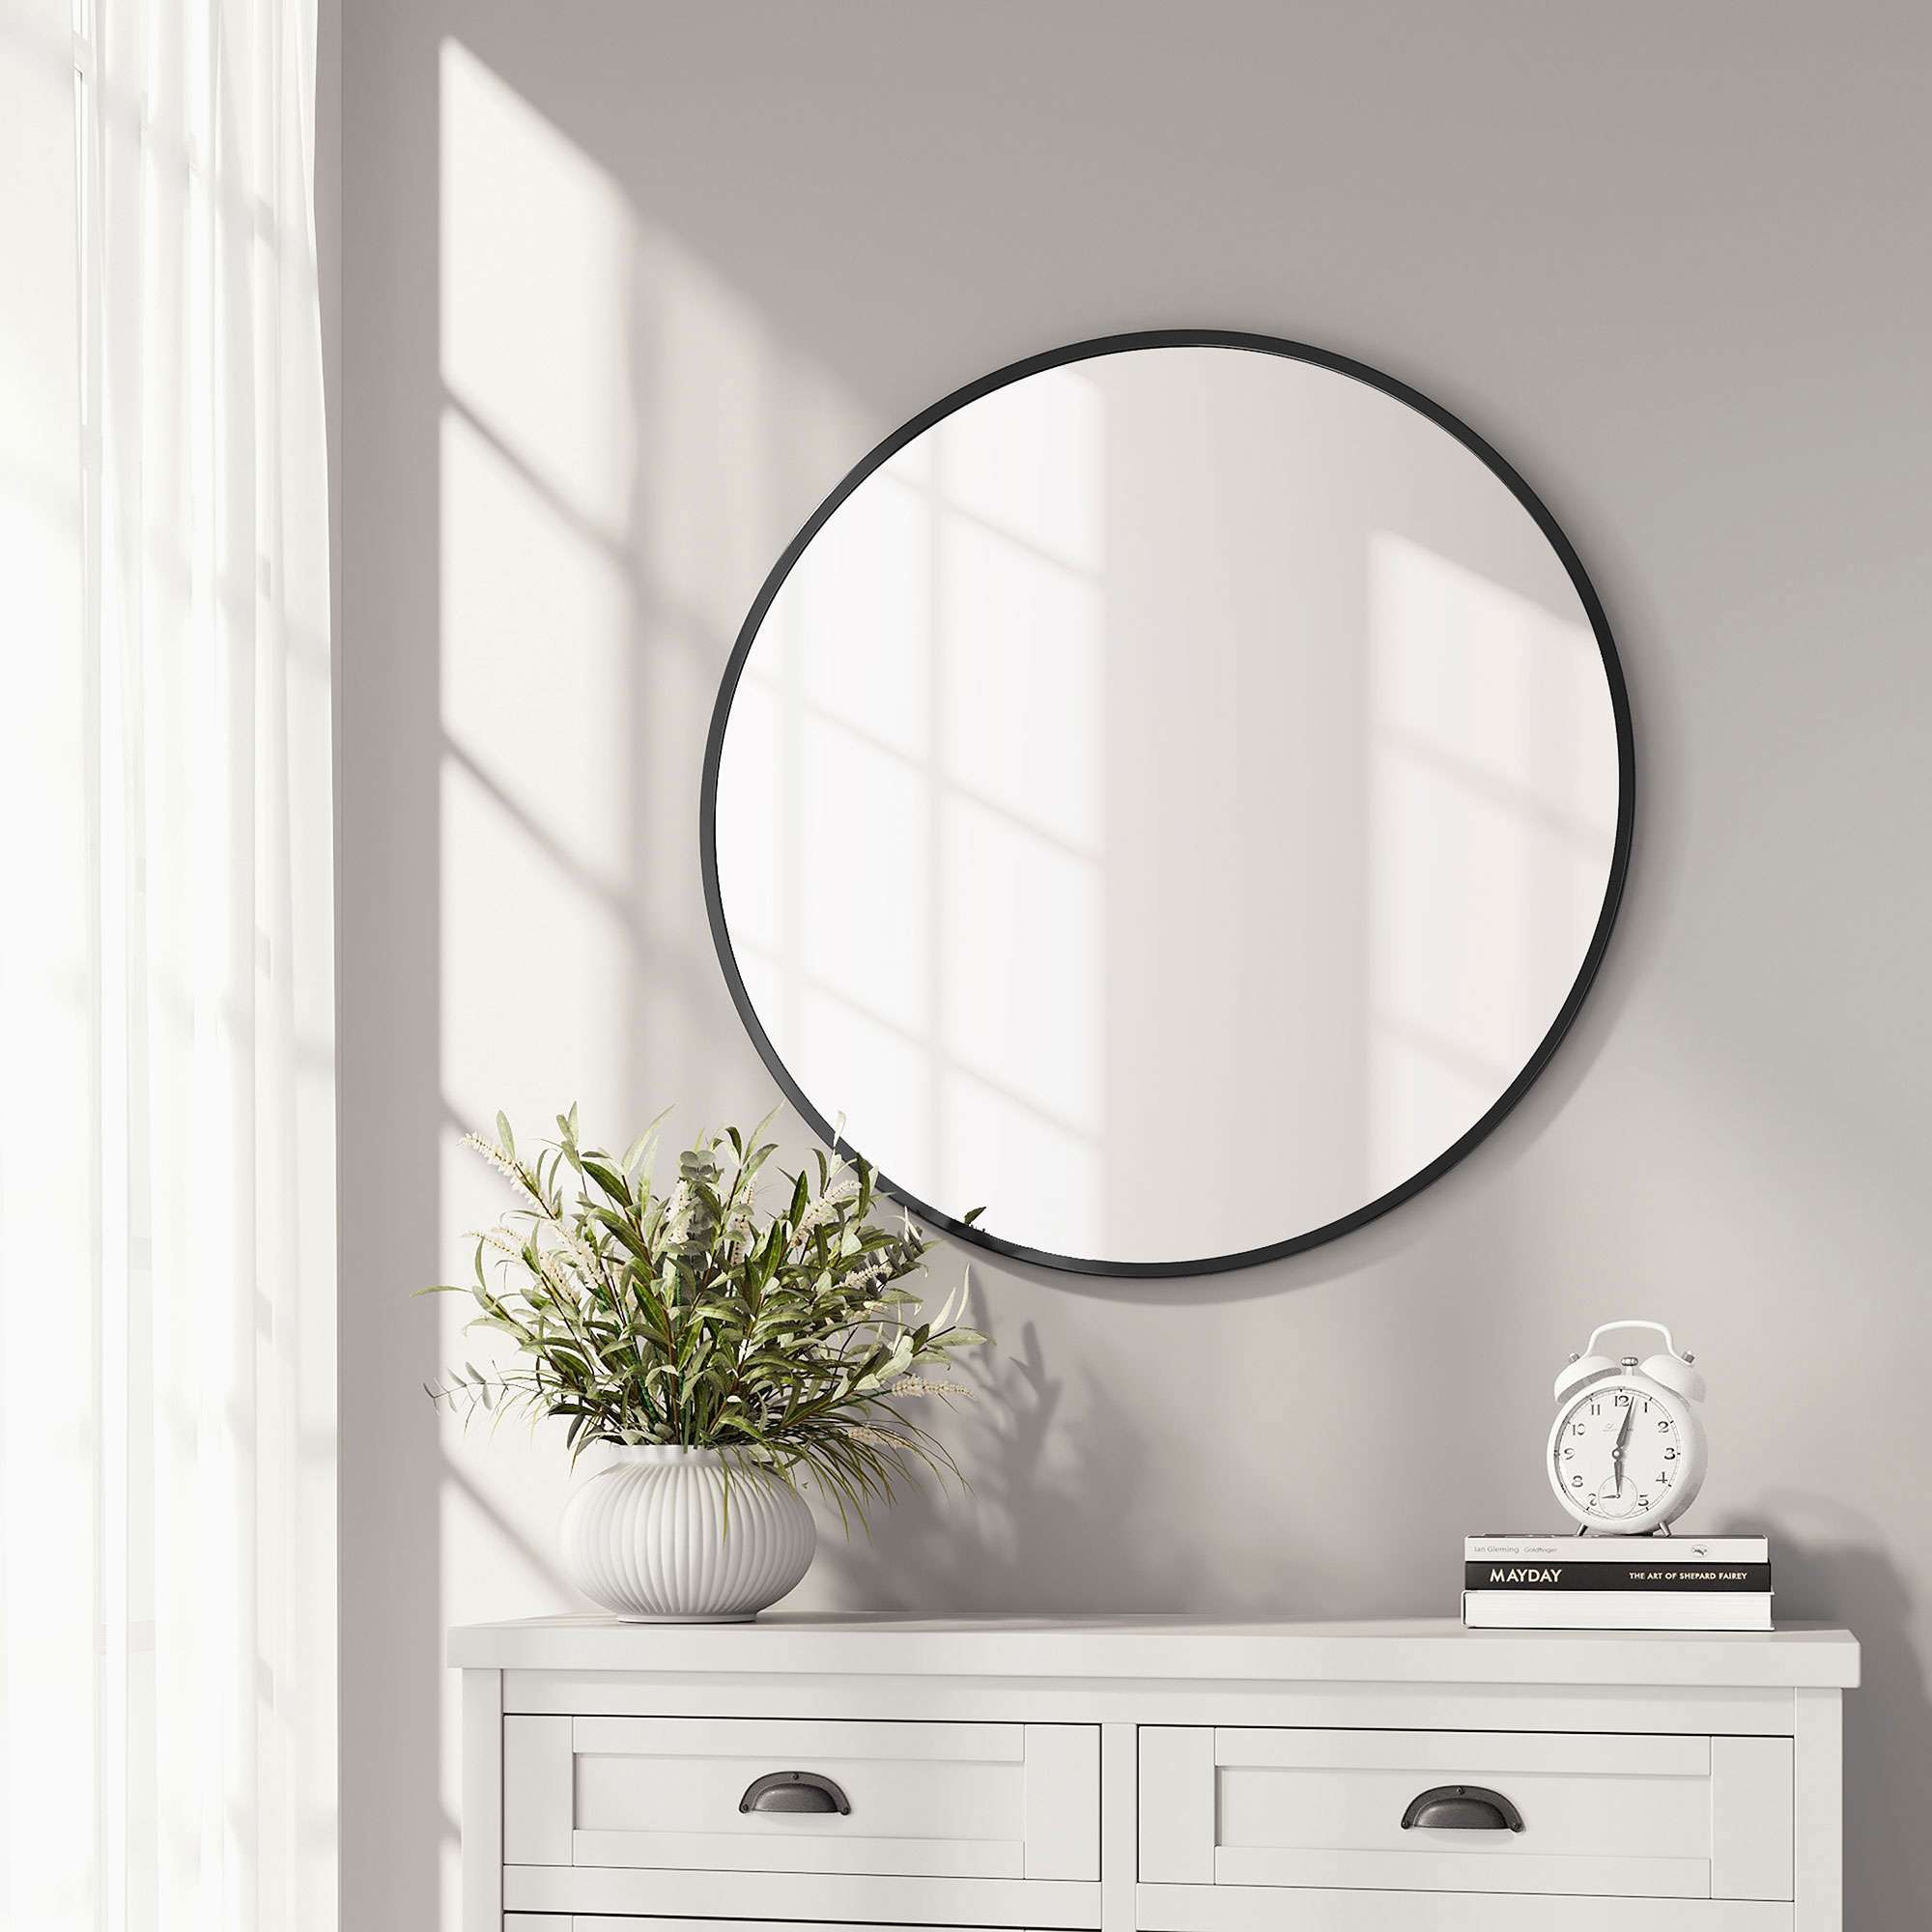 Barnyard Designs 24 inch Black Round Mirror, Modern Bathroom Mirrors for Wall, Farmhouse Mirror, Metal Framed Round Mirror, Circle Mirrors for Wall, Bathroom Vanity Mirror, Wall Mirrors Home Decor - image 5 of 7